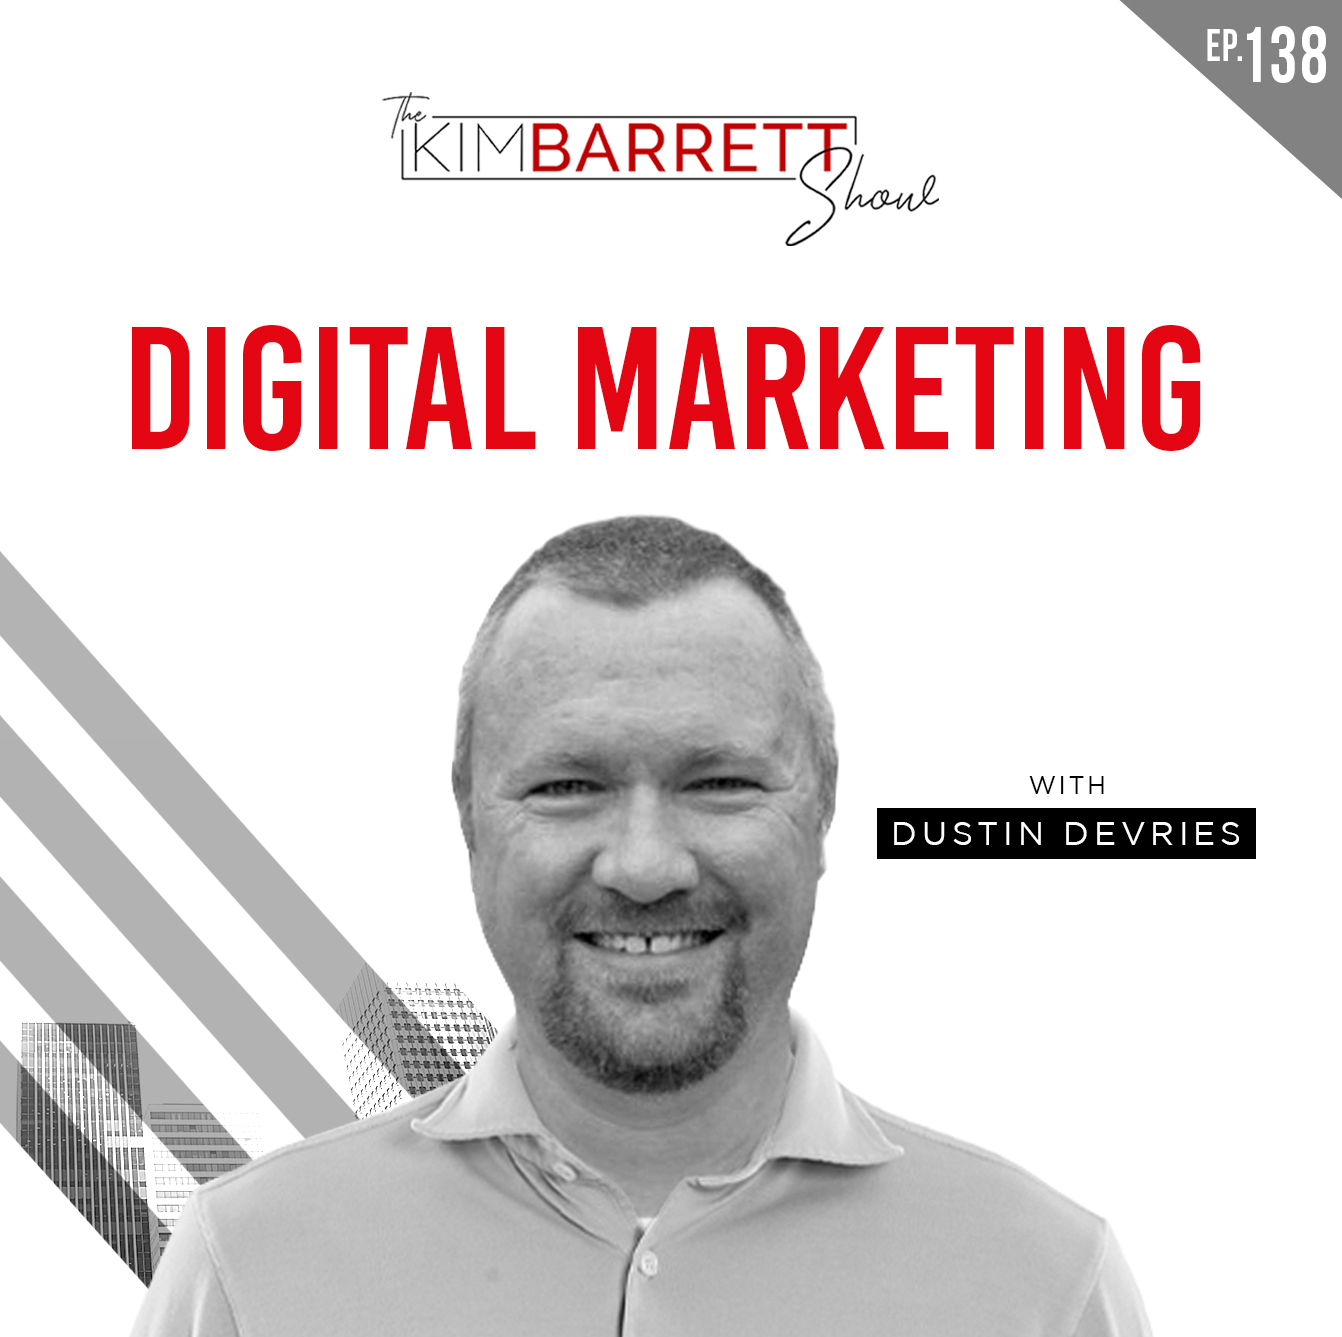 Digital Marketing With Dustin Devries